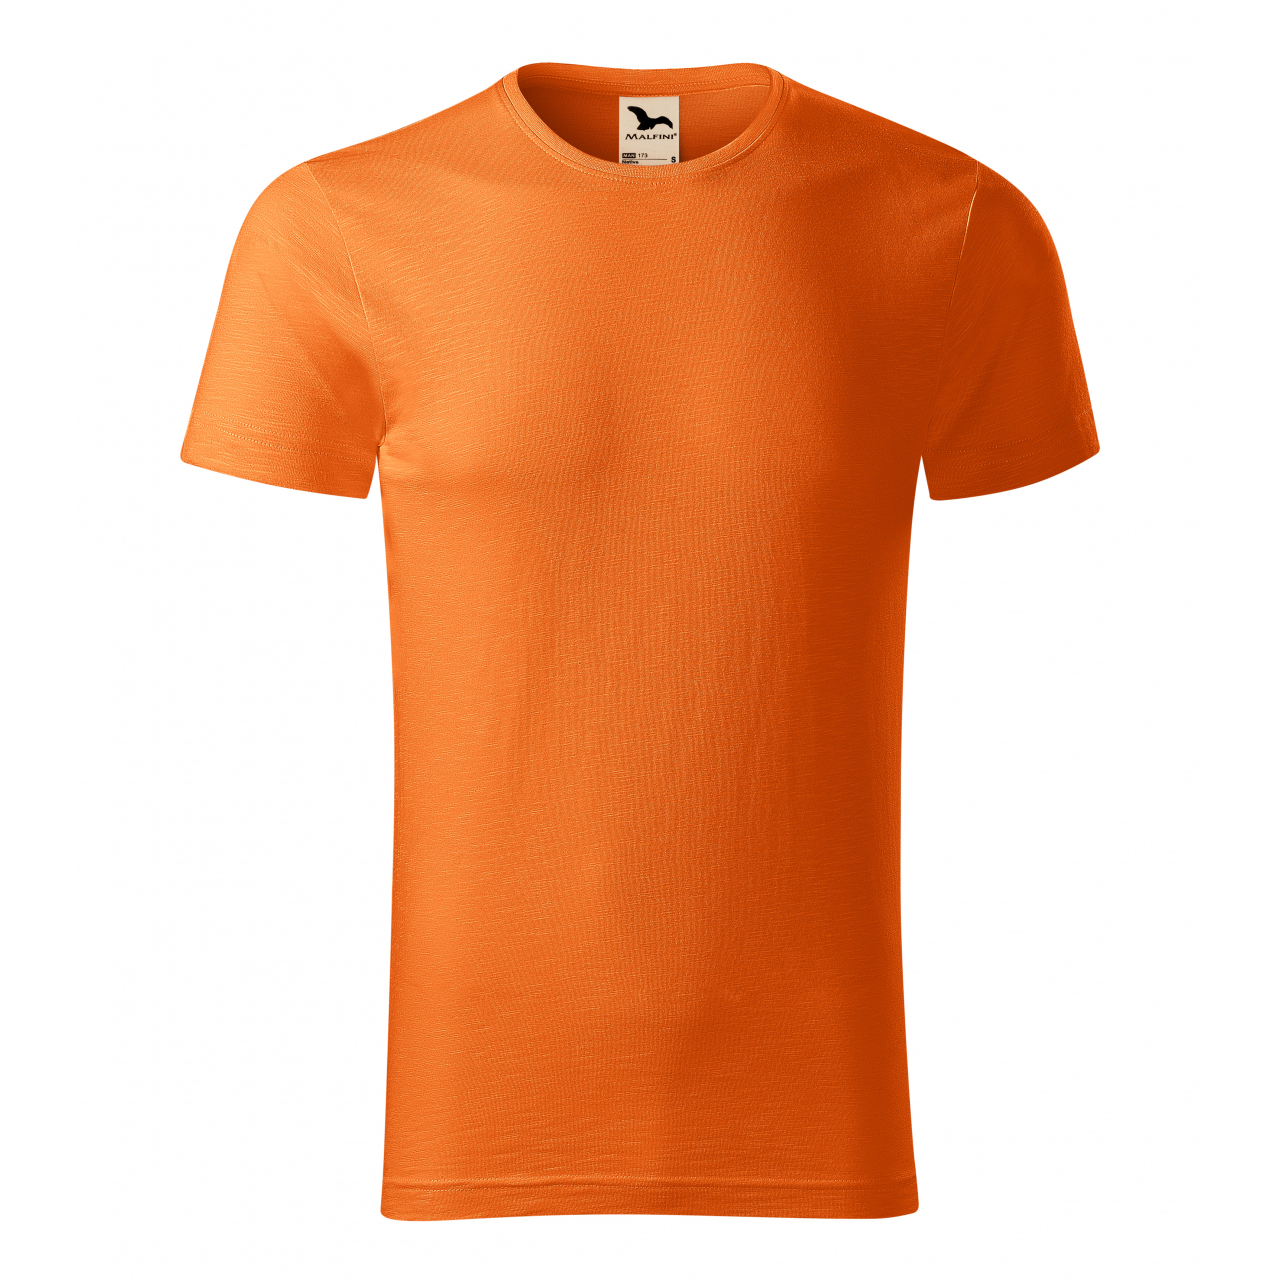 Tričko pánské Malfini Native - oranžové, L